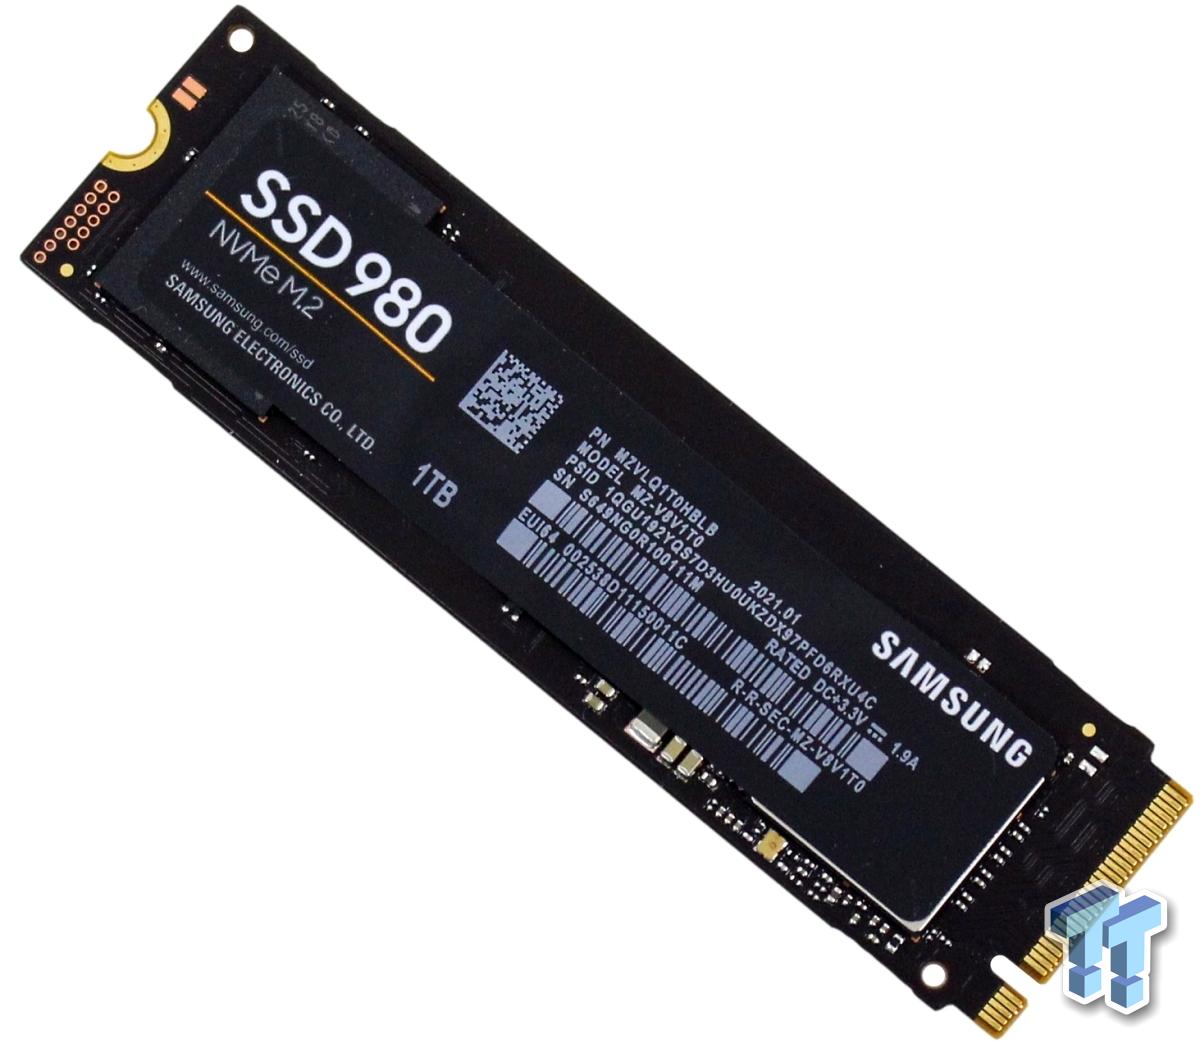 Samsung SSD980 NVMe M2 1TB